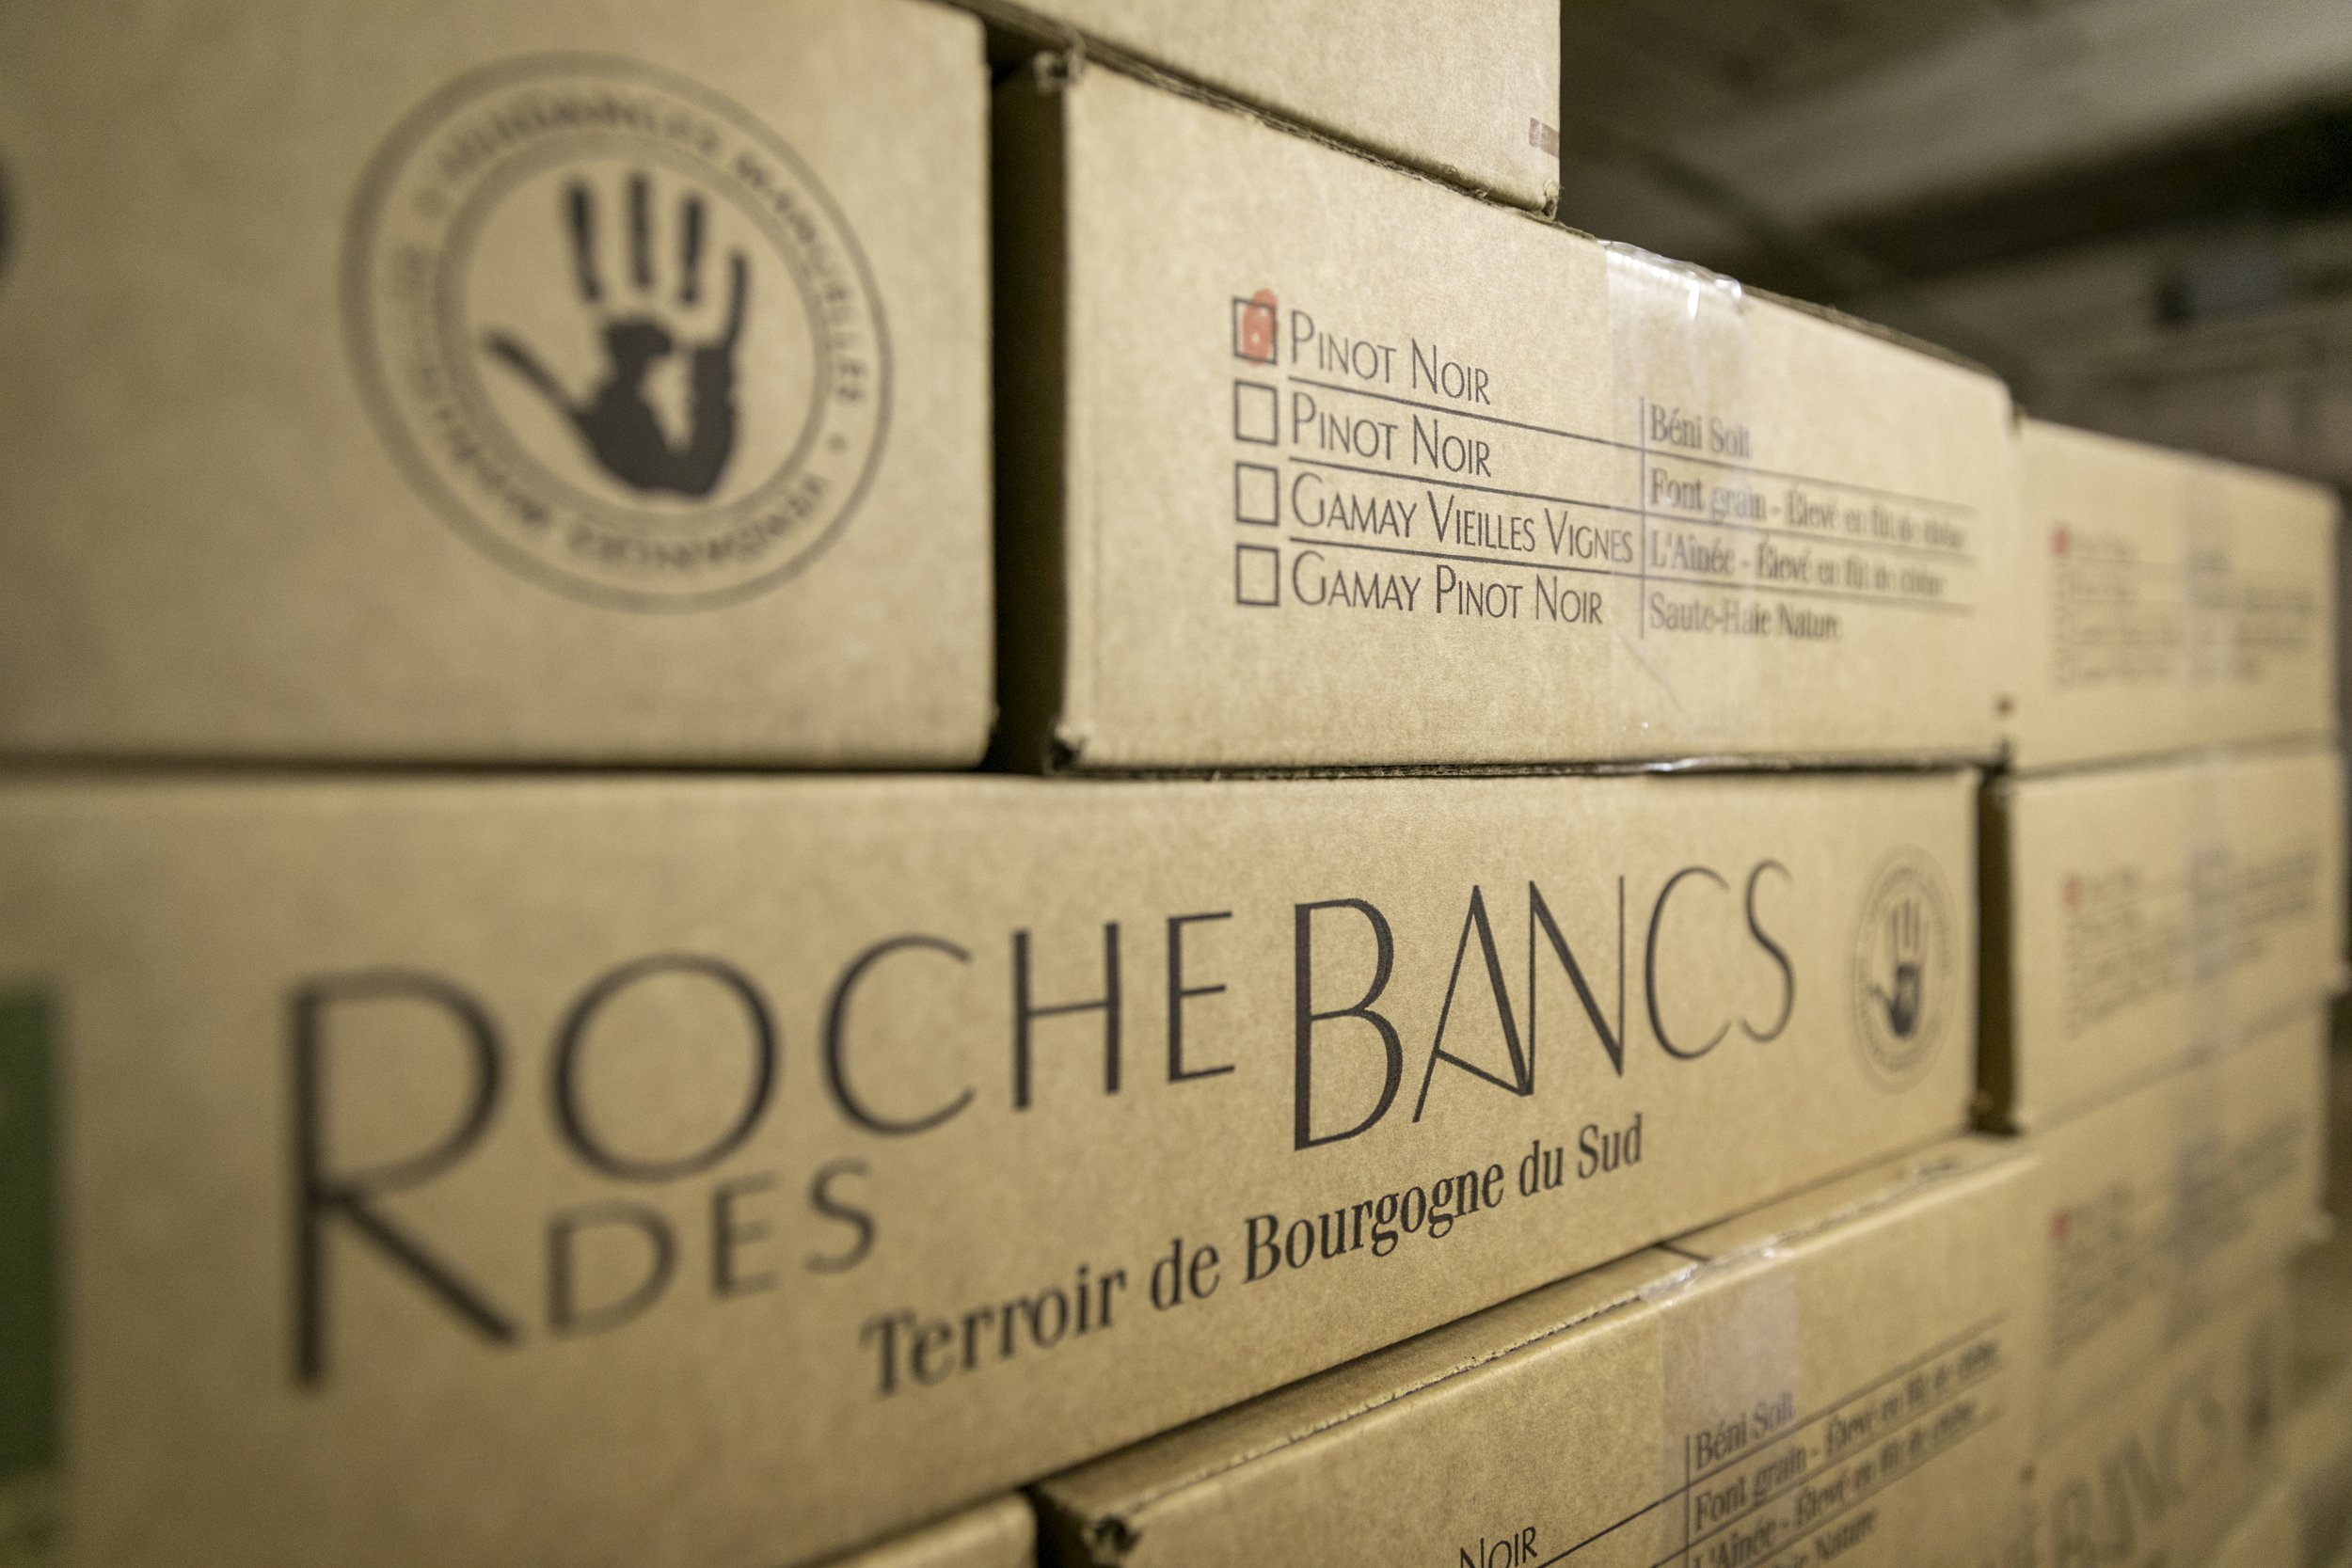 090-202110-Roche des Bancs-687.JPG